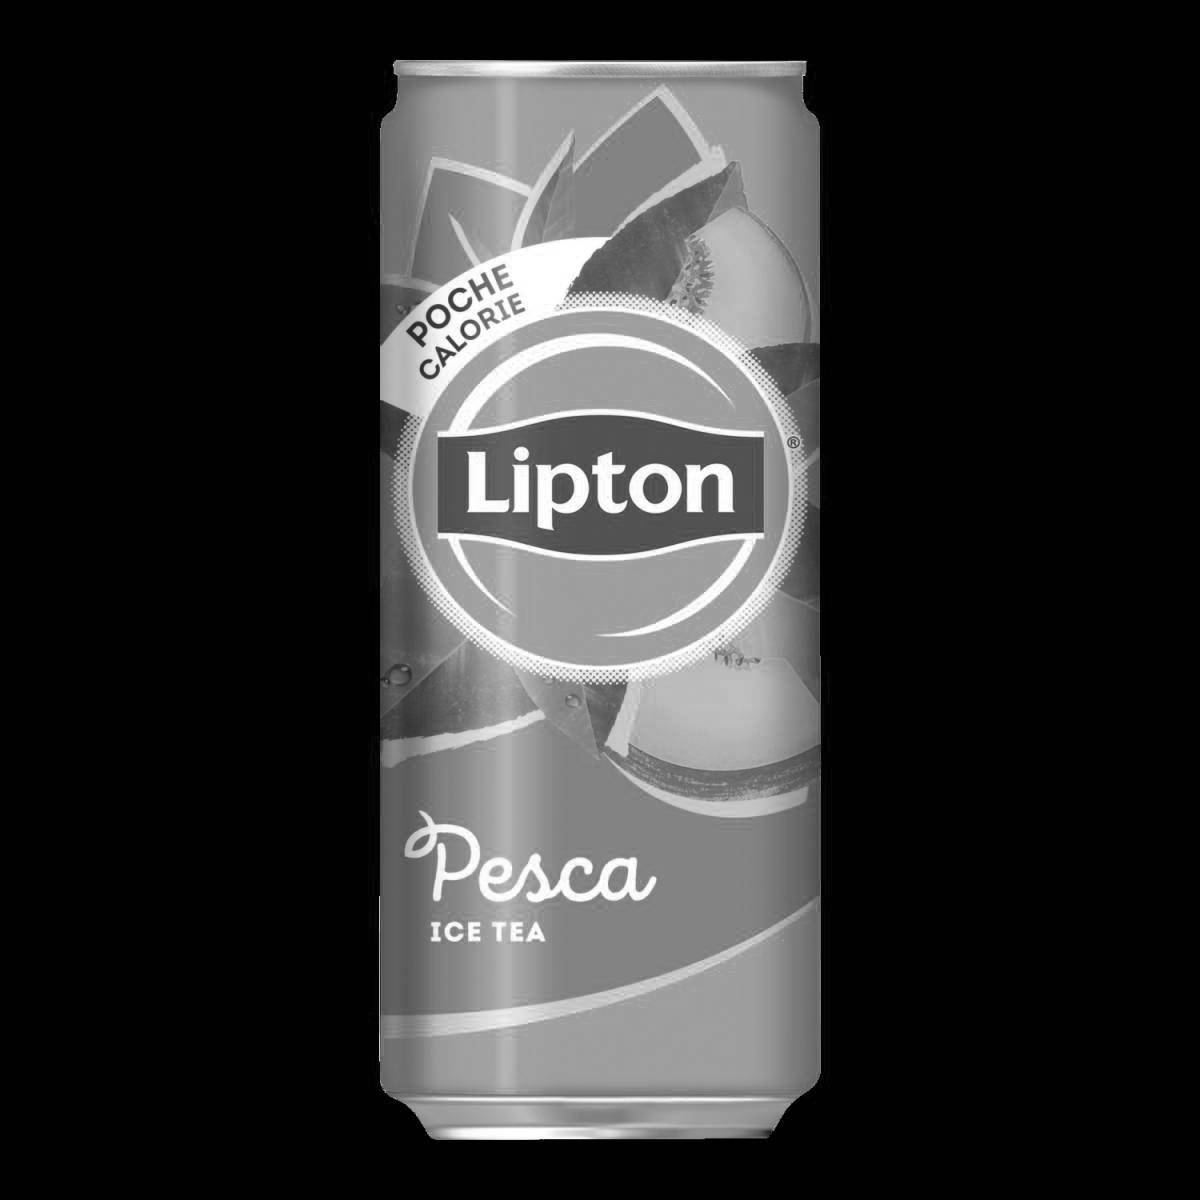 Lipton #2